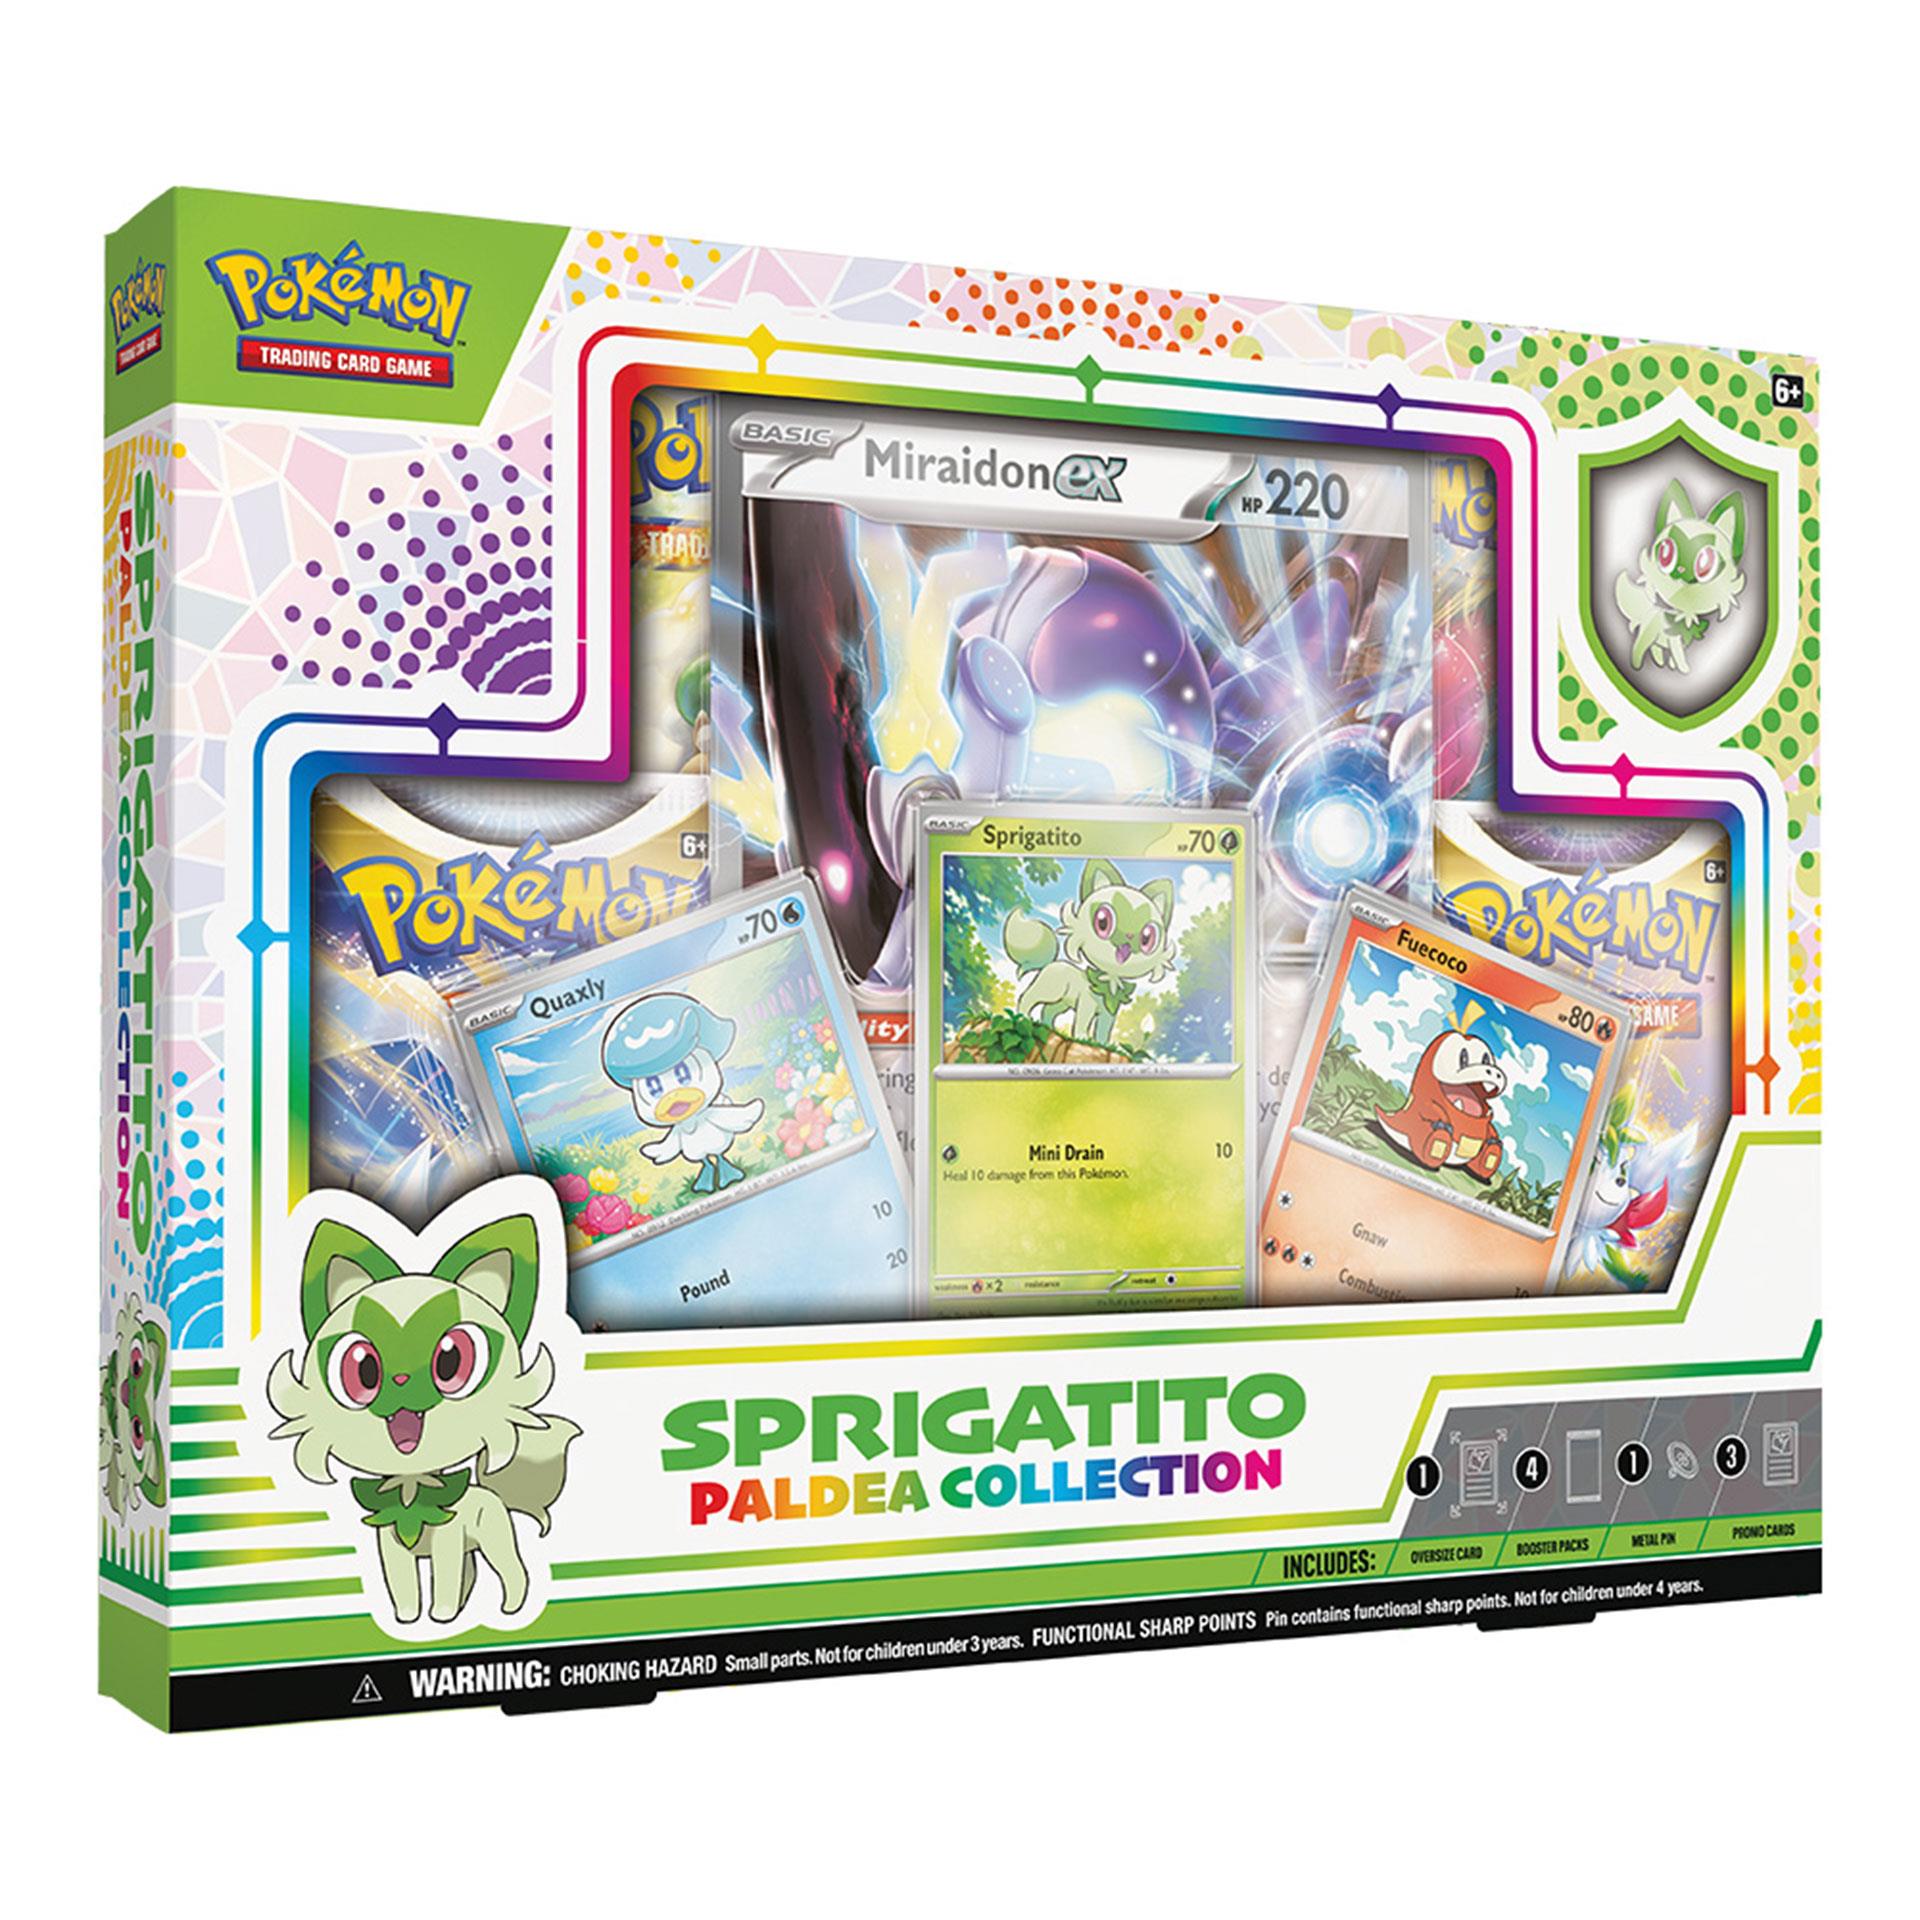 Pokémon Sprigatito Paldea – Collection Box